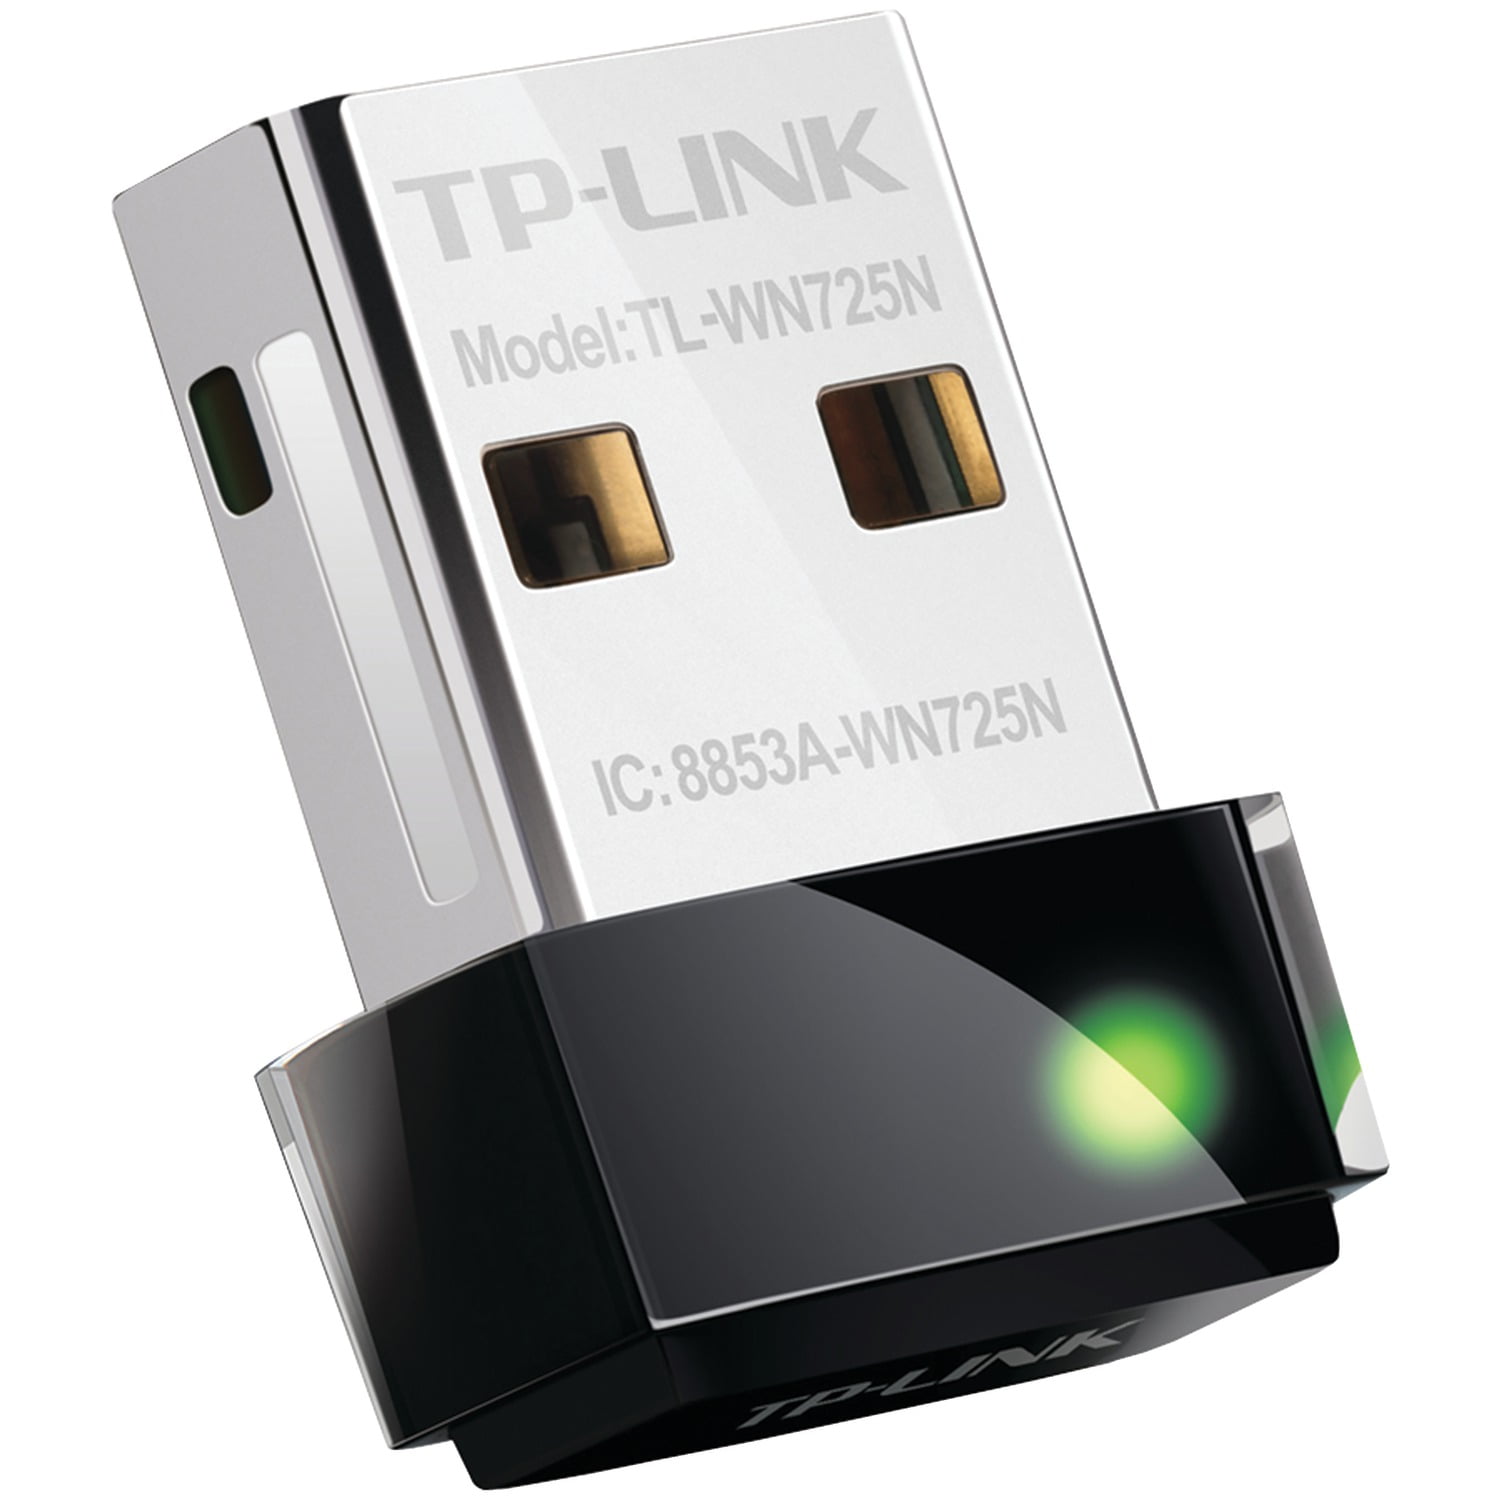 Адаптер tl wn725n. TP-link TL-wn725n. Tip-link model TL-wn725n. Нано Wi Fi адаптер TPP-link TL-wn725n. Сломан сетевой адаптер WIFI TP-link TL-wn725n USB 2.0.